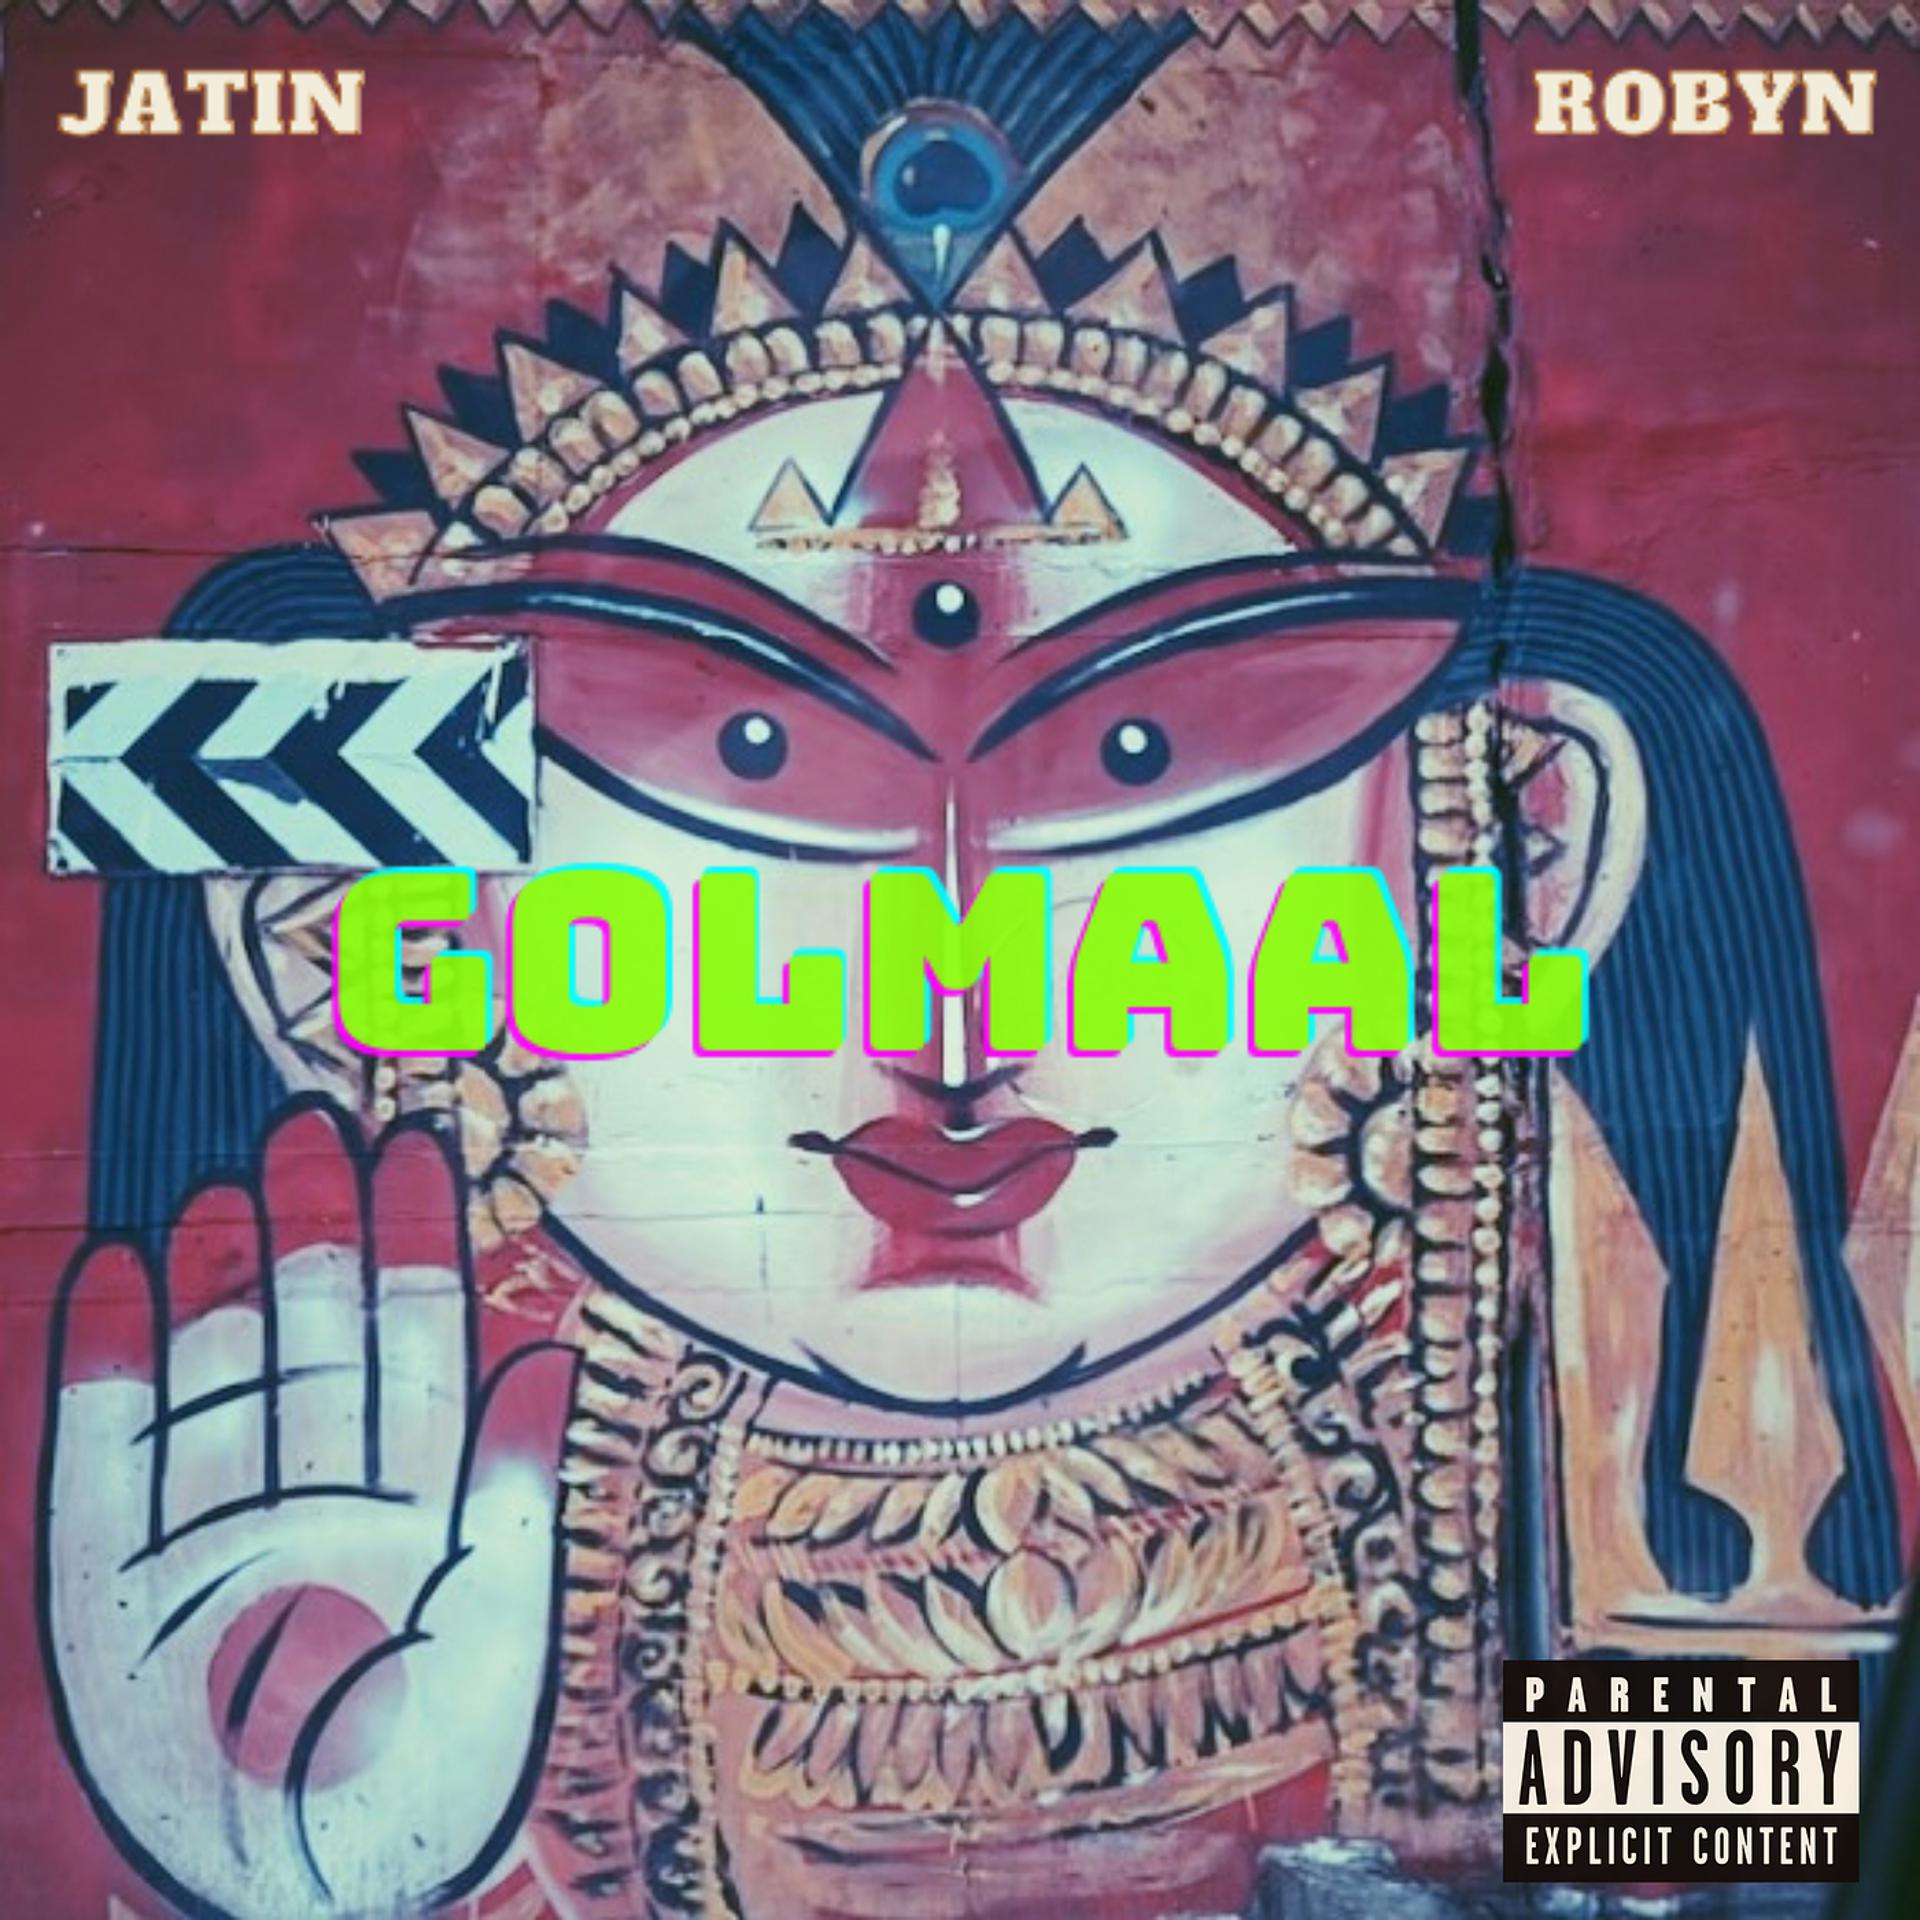 Постер альбома Golmaal